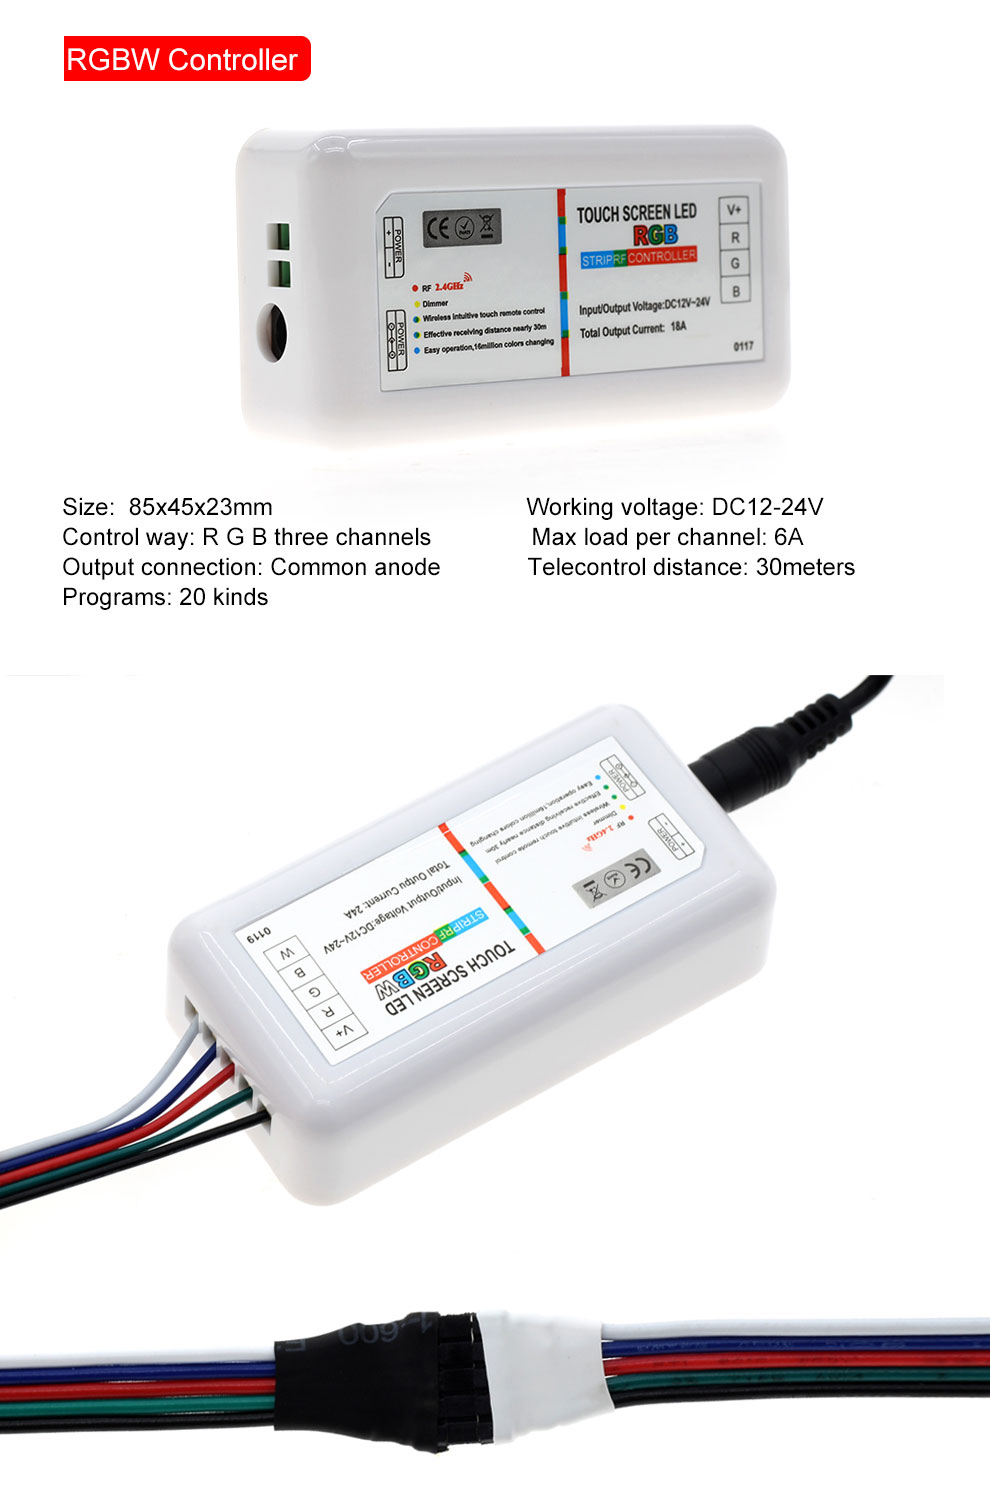 FEICAN 5050 LED Strip RGB / RGBW / RGBWW 5M 300LEDs Neon Tape Light + 2.4 G Remote Controller + DC 12V 3A Power Adapter